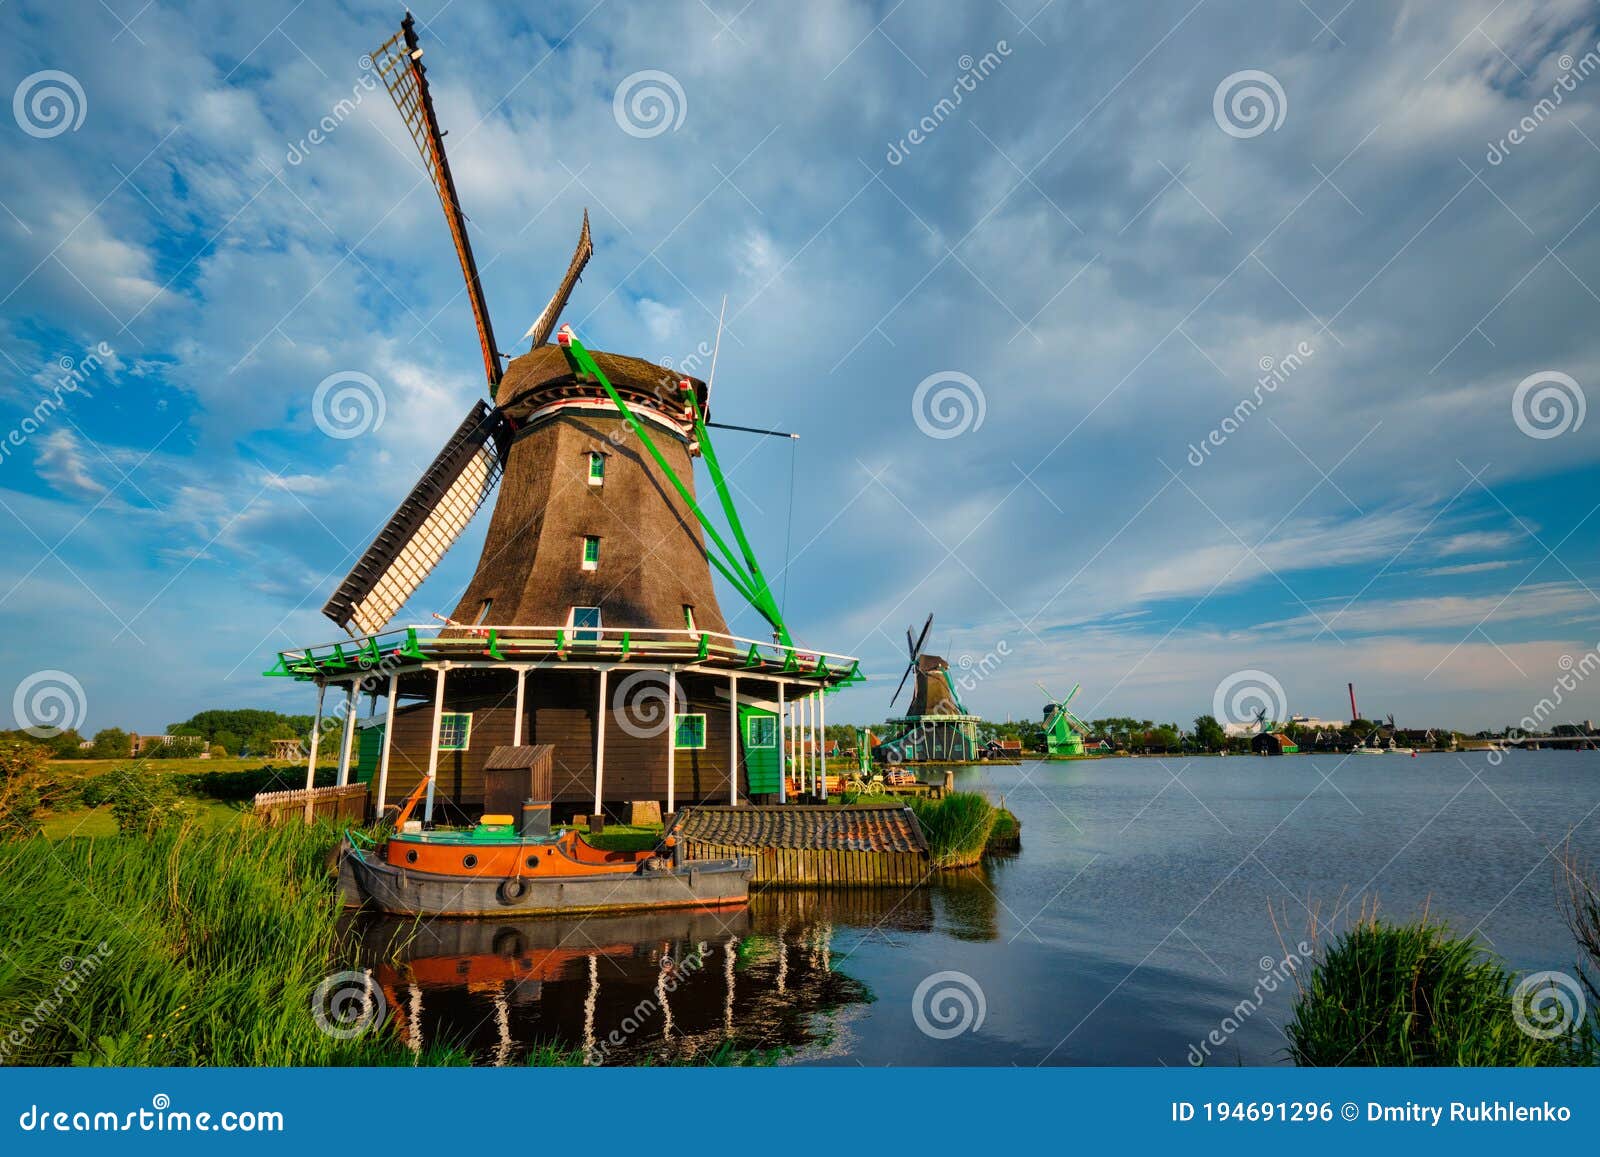 windmills at zaanse schans in holland. zaandam, nether